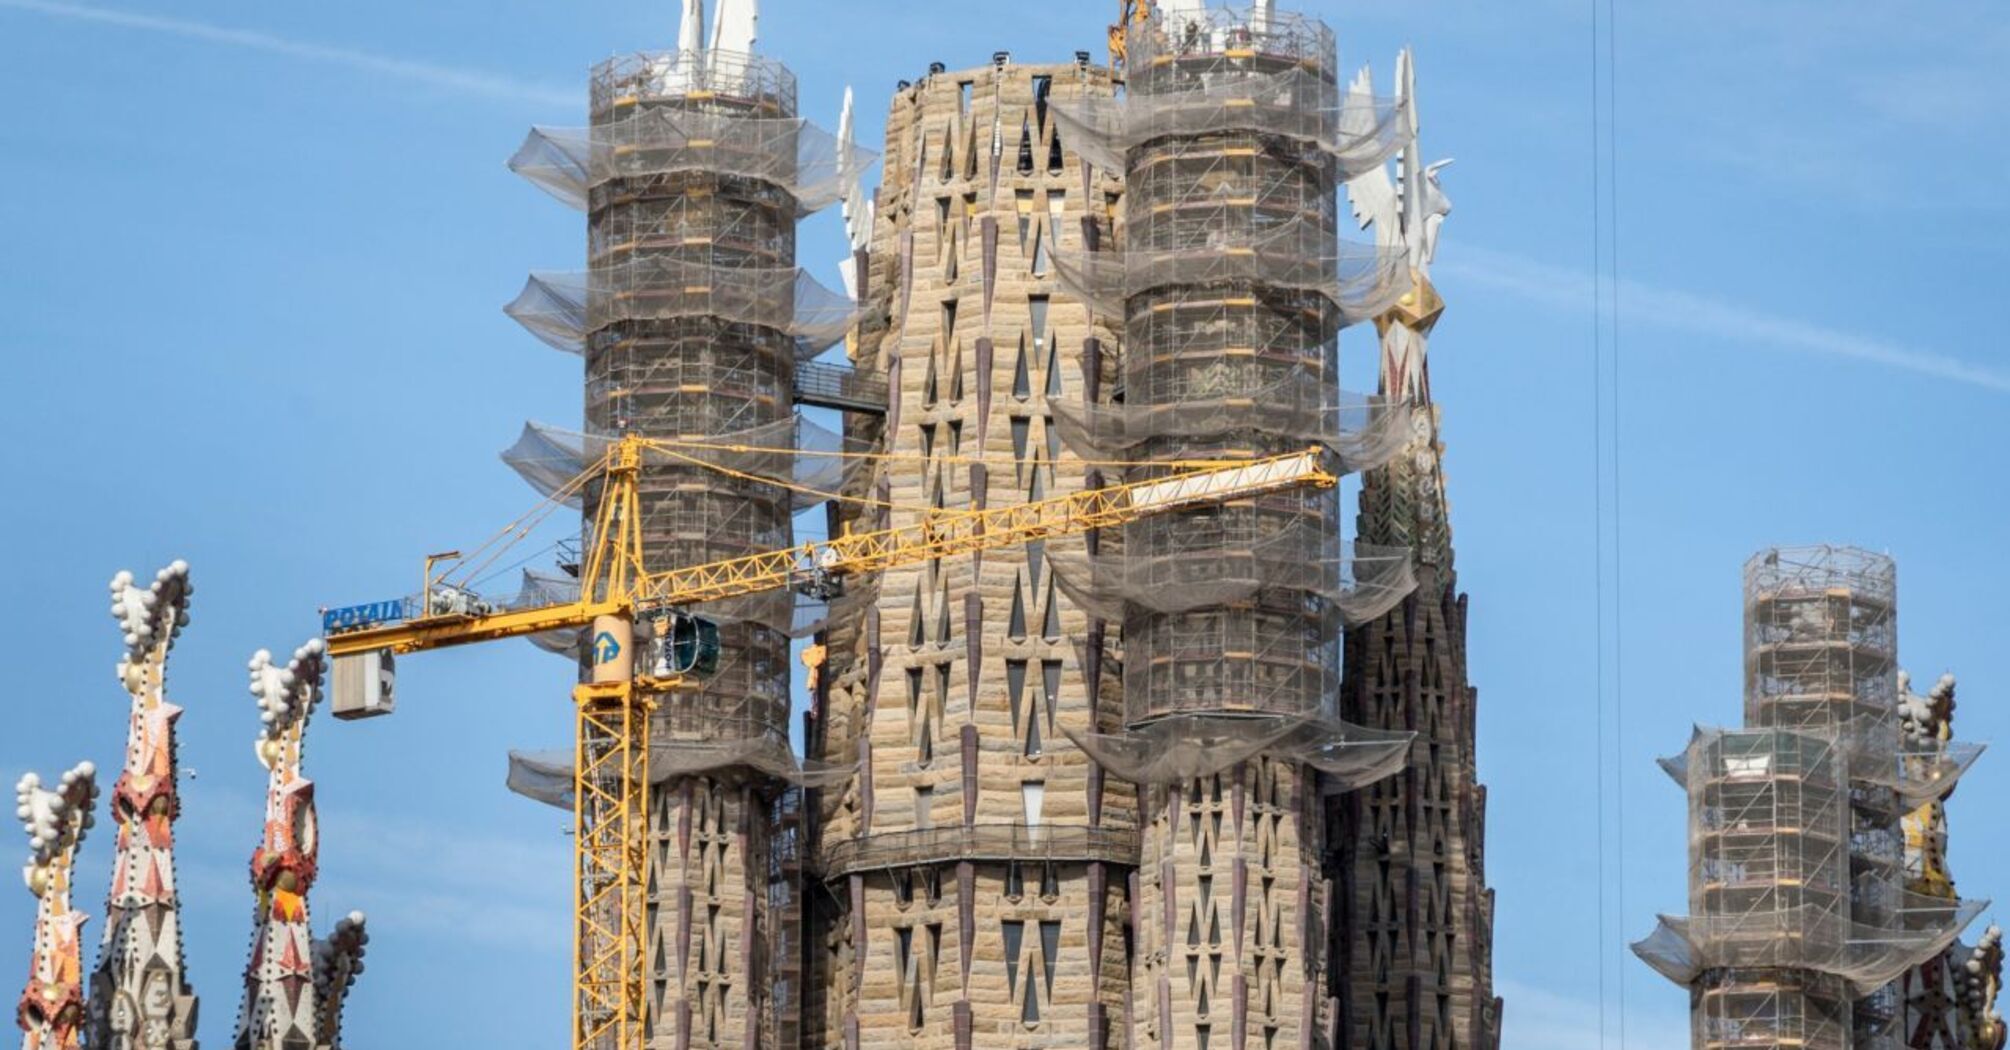 Construction of the Sagrada Familia